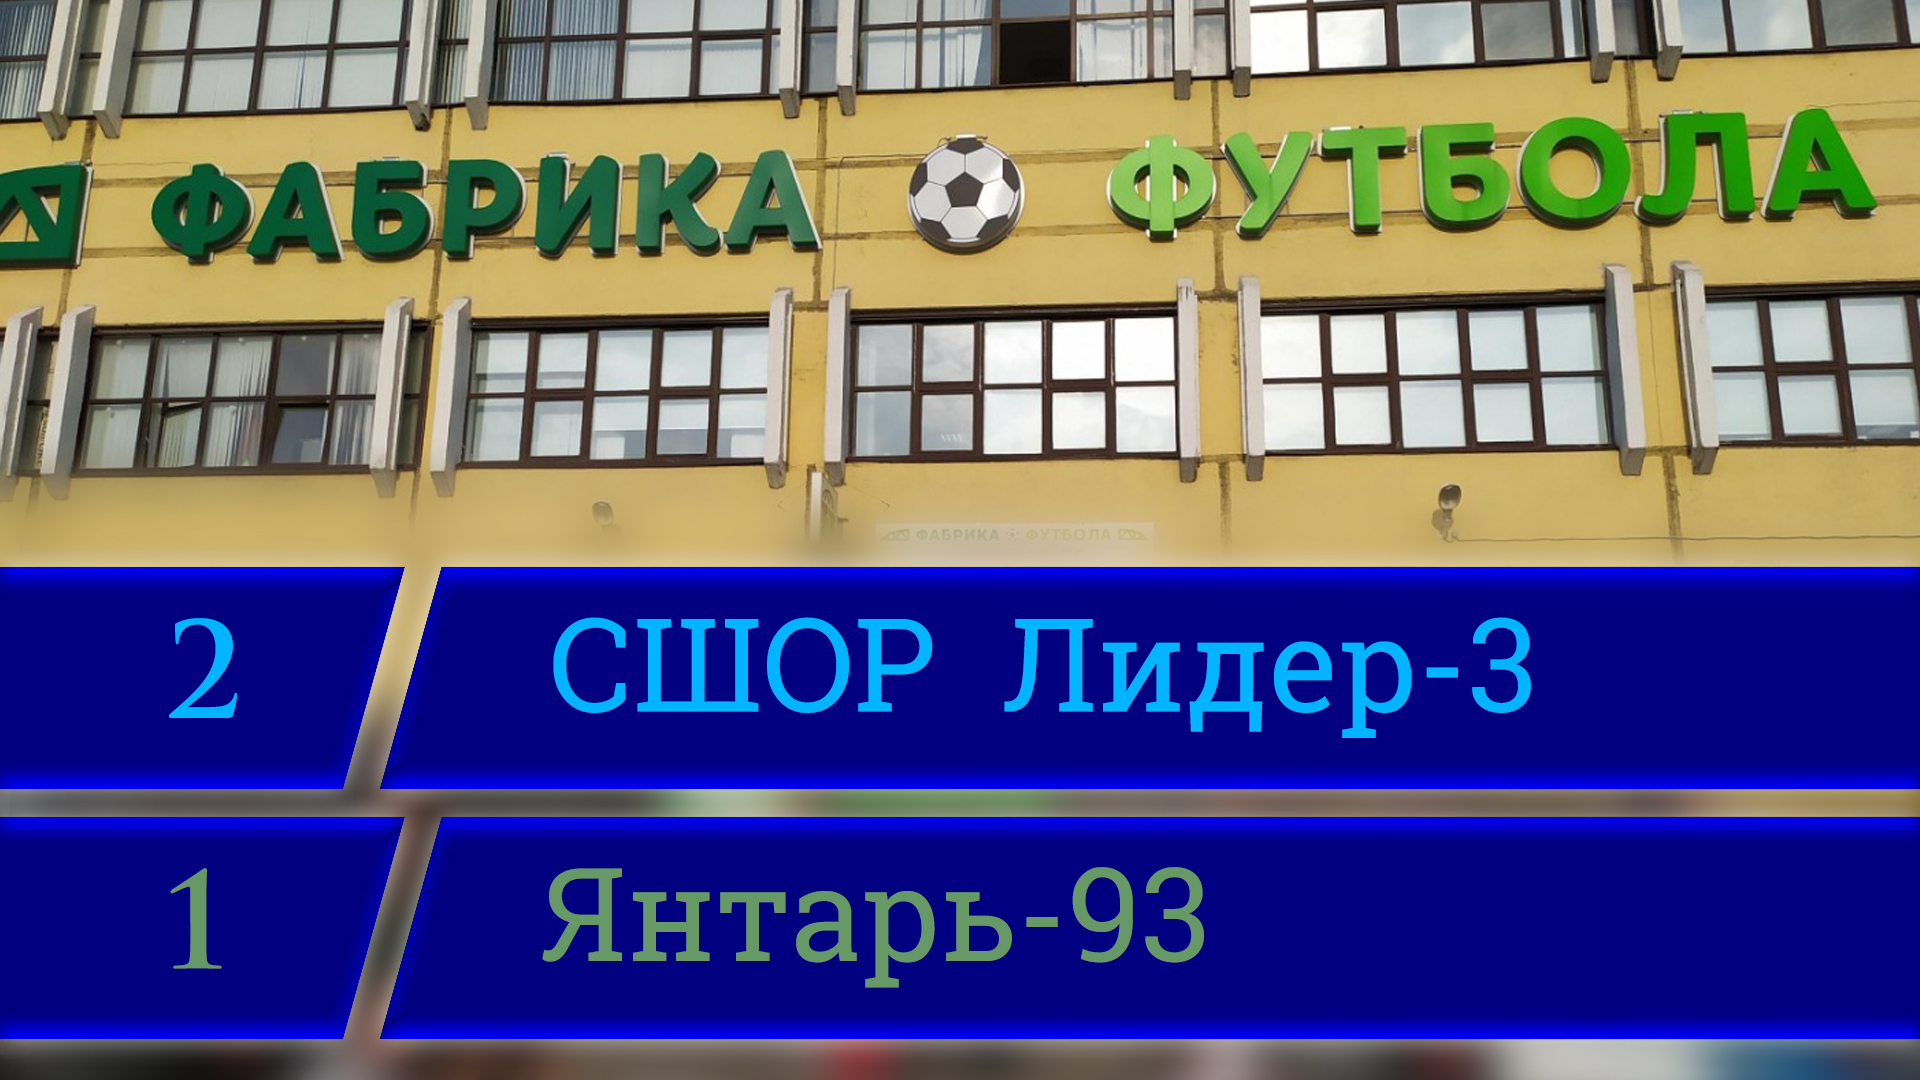 СШОР Лидер-3 - ФК Янтарь-93 (2:1), Турнир Sport Is Life, Фабрика Футбола, 07.03.2022